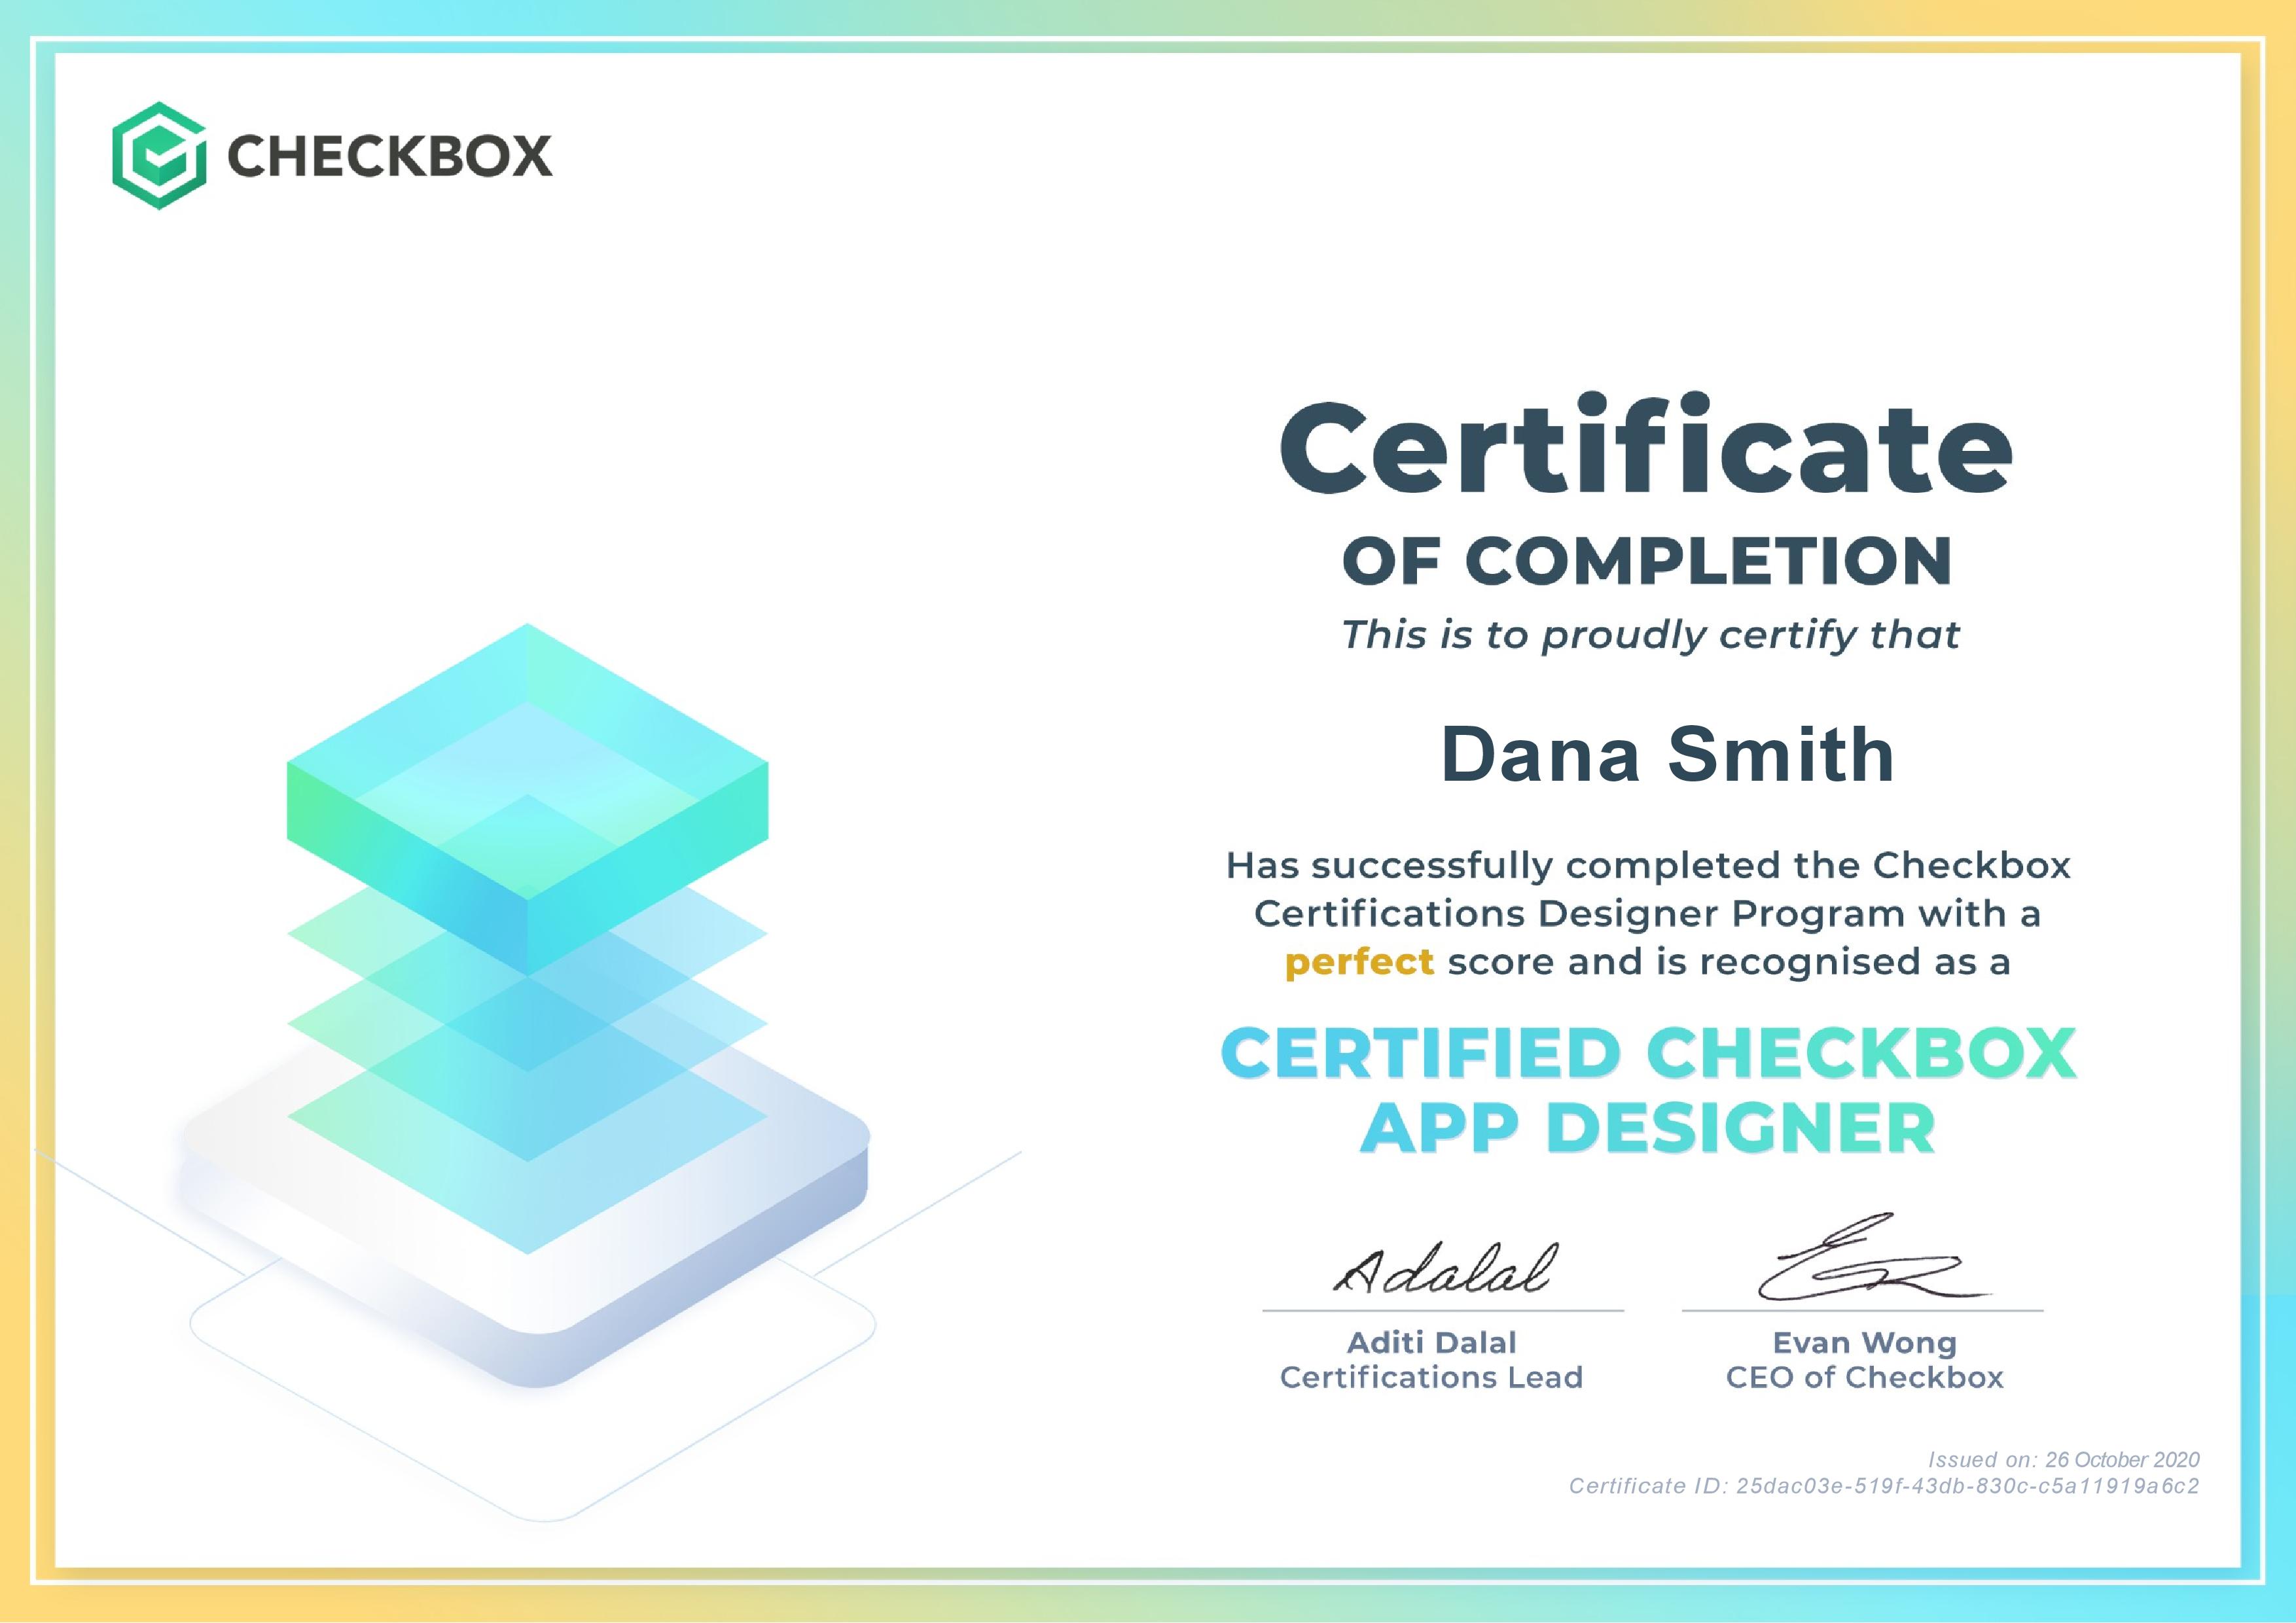 Checkbox-Certified-App-Designer-Dana-Smith__1_-page-001.jpg